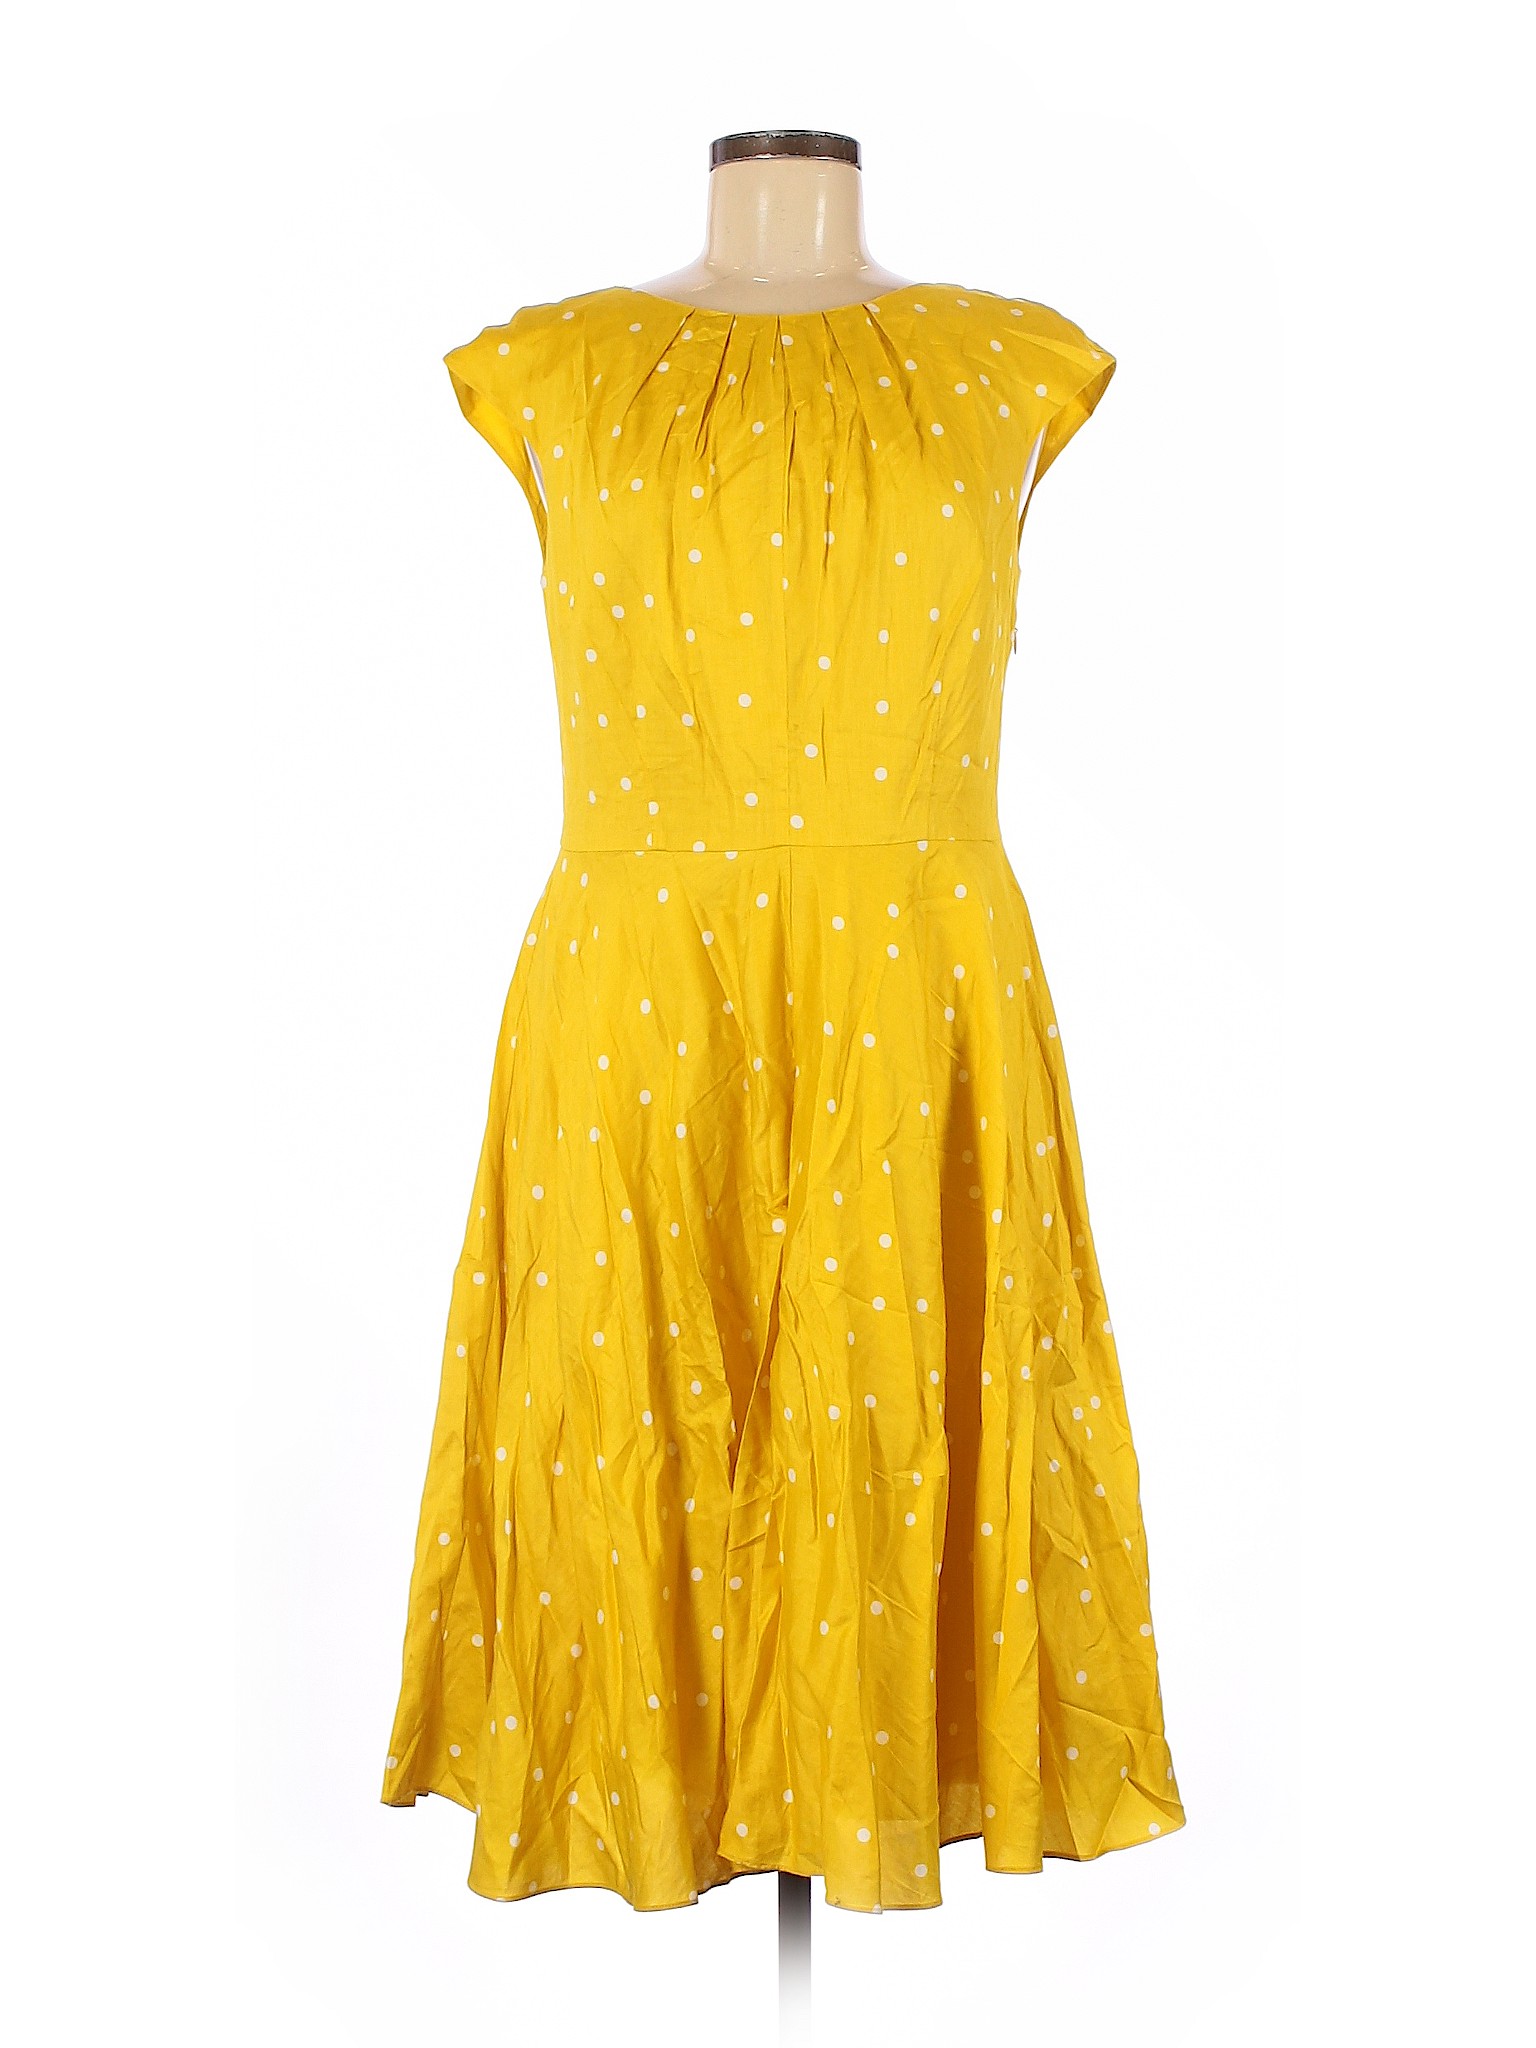 Boden Women Yellow Casual Dress 8 | eBay